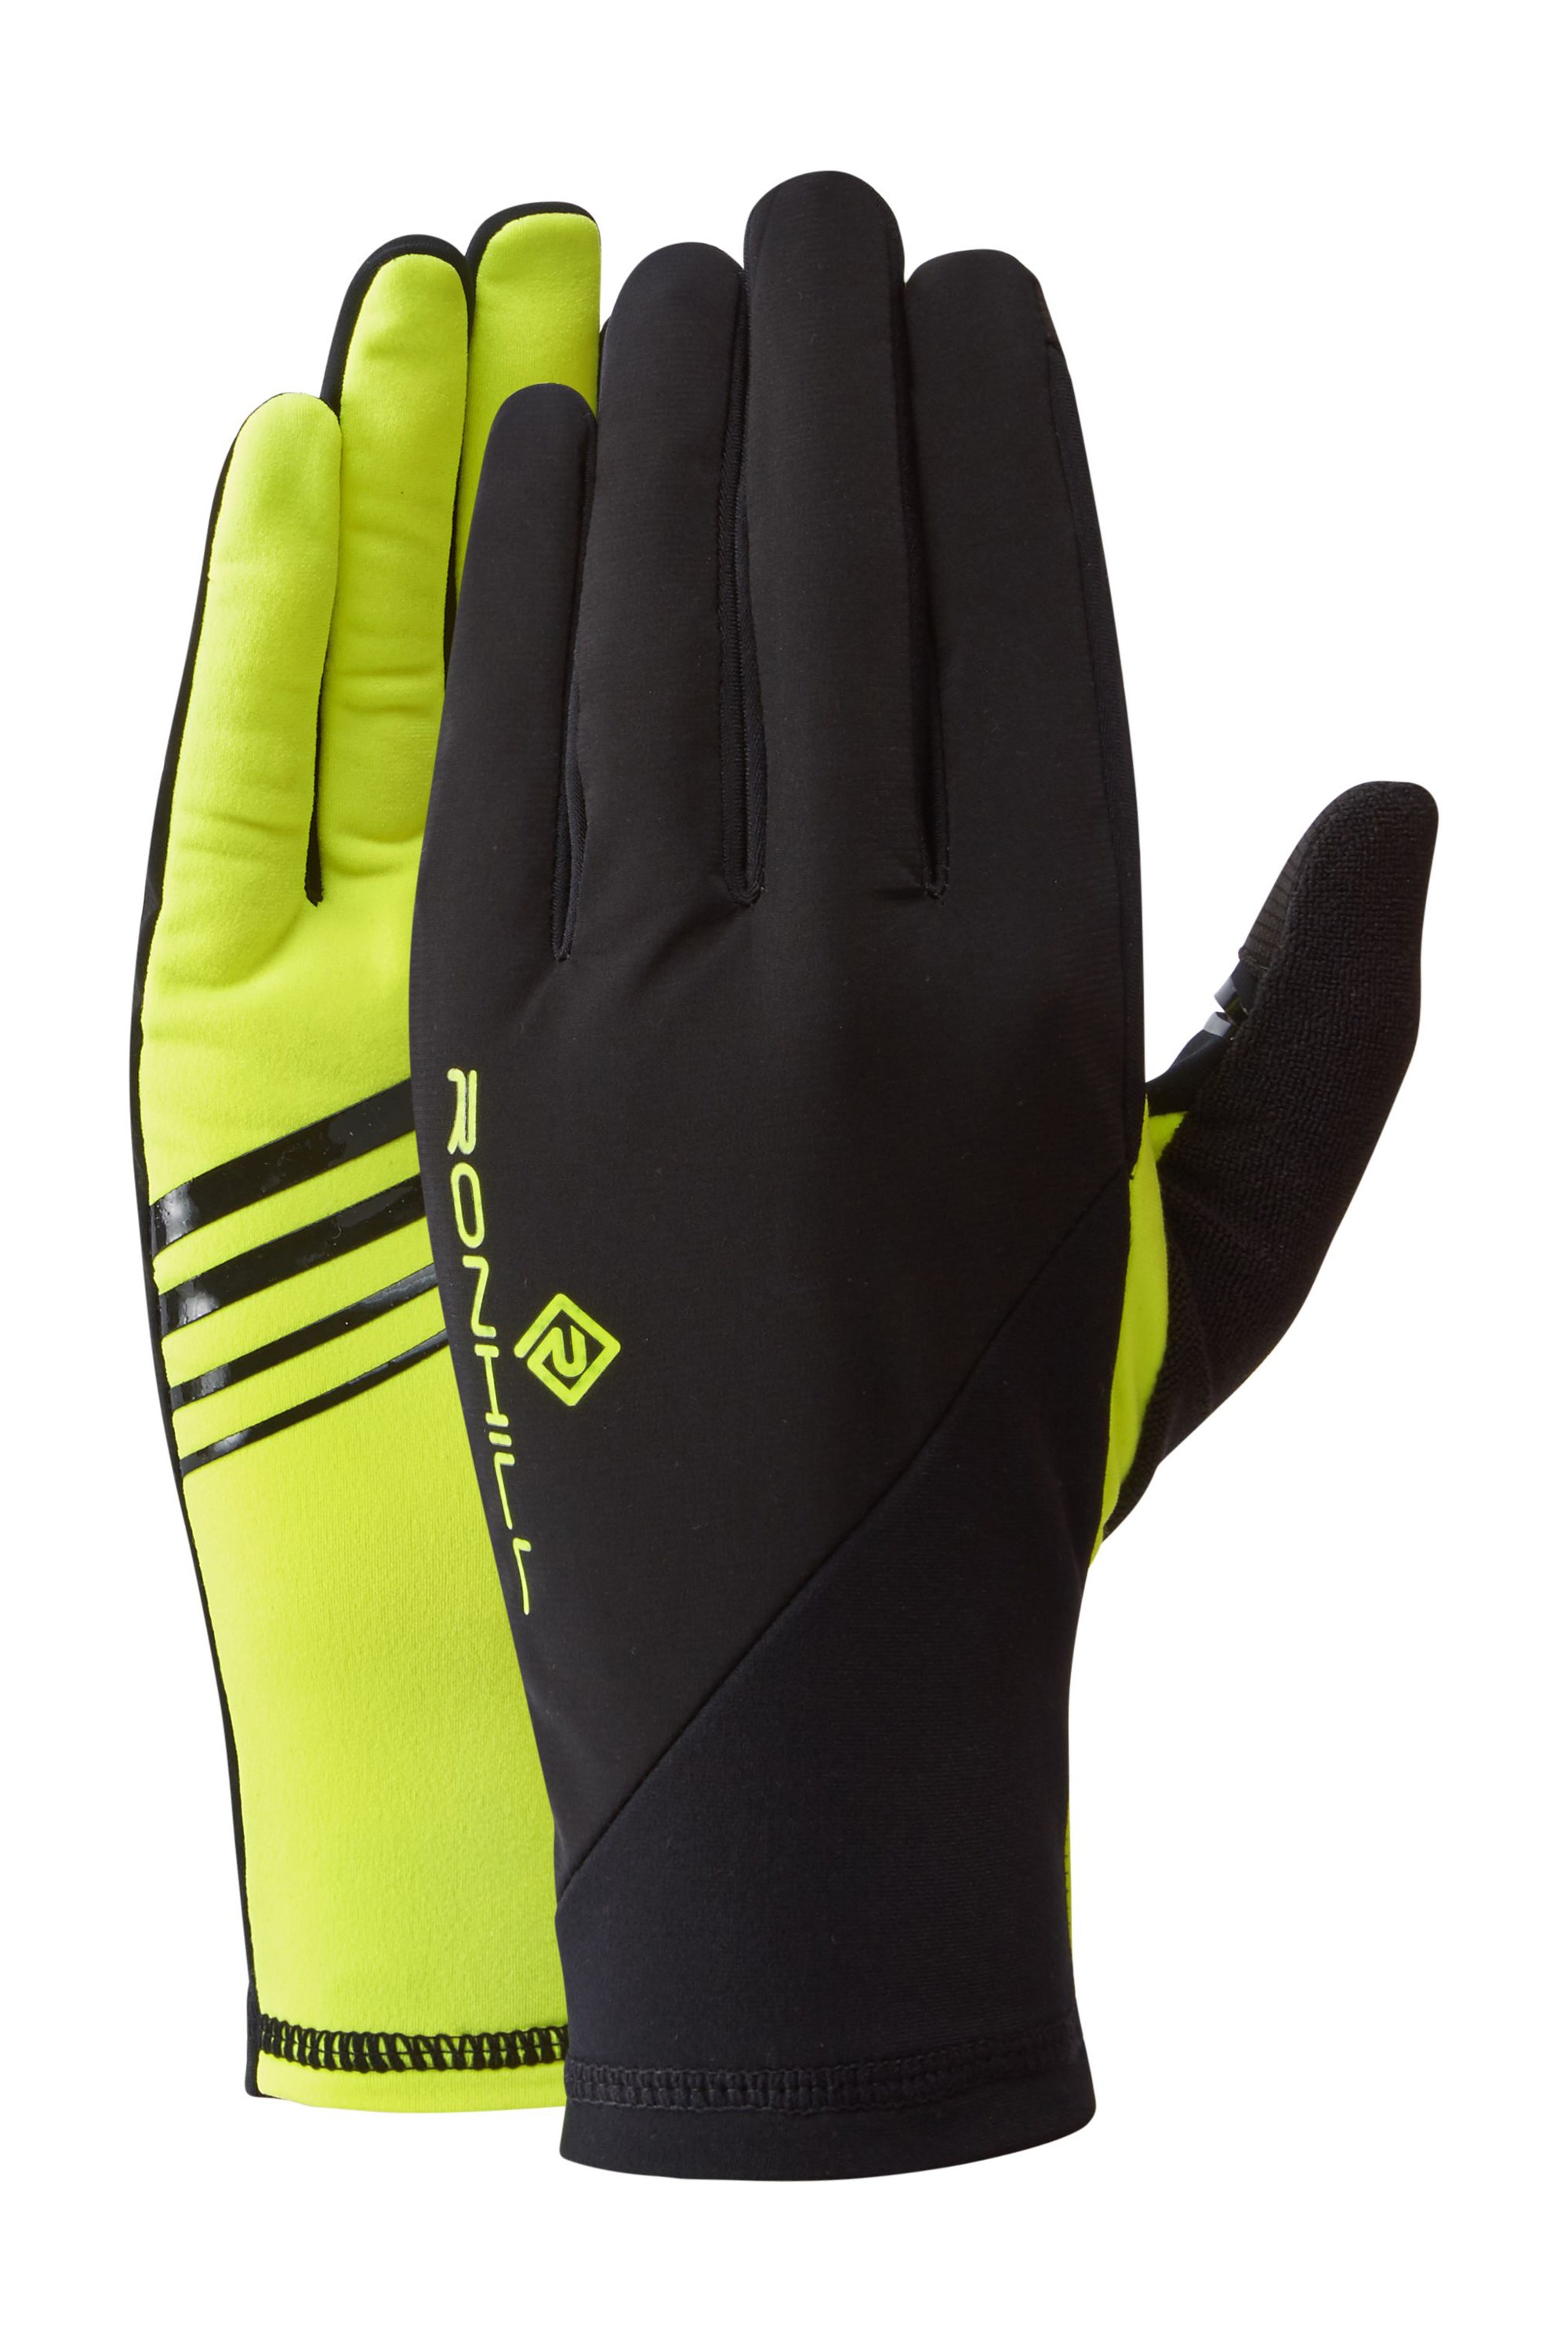 Ronhill Wind-Block Glove - Yellow